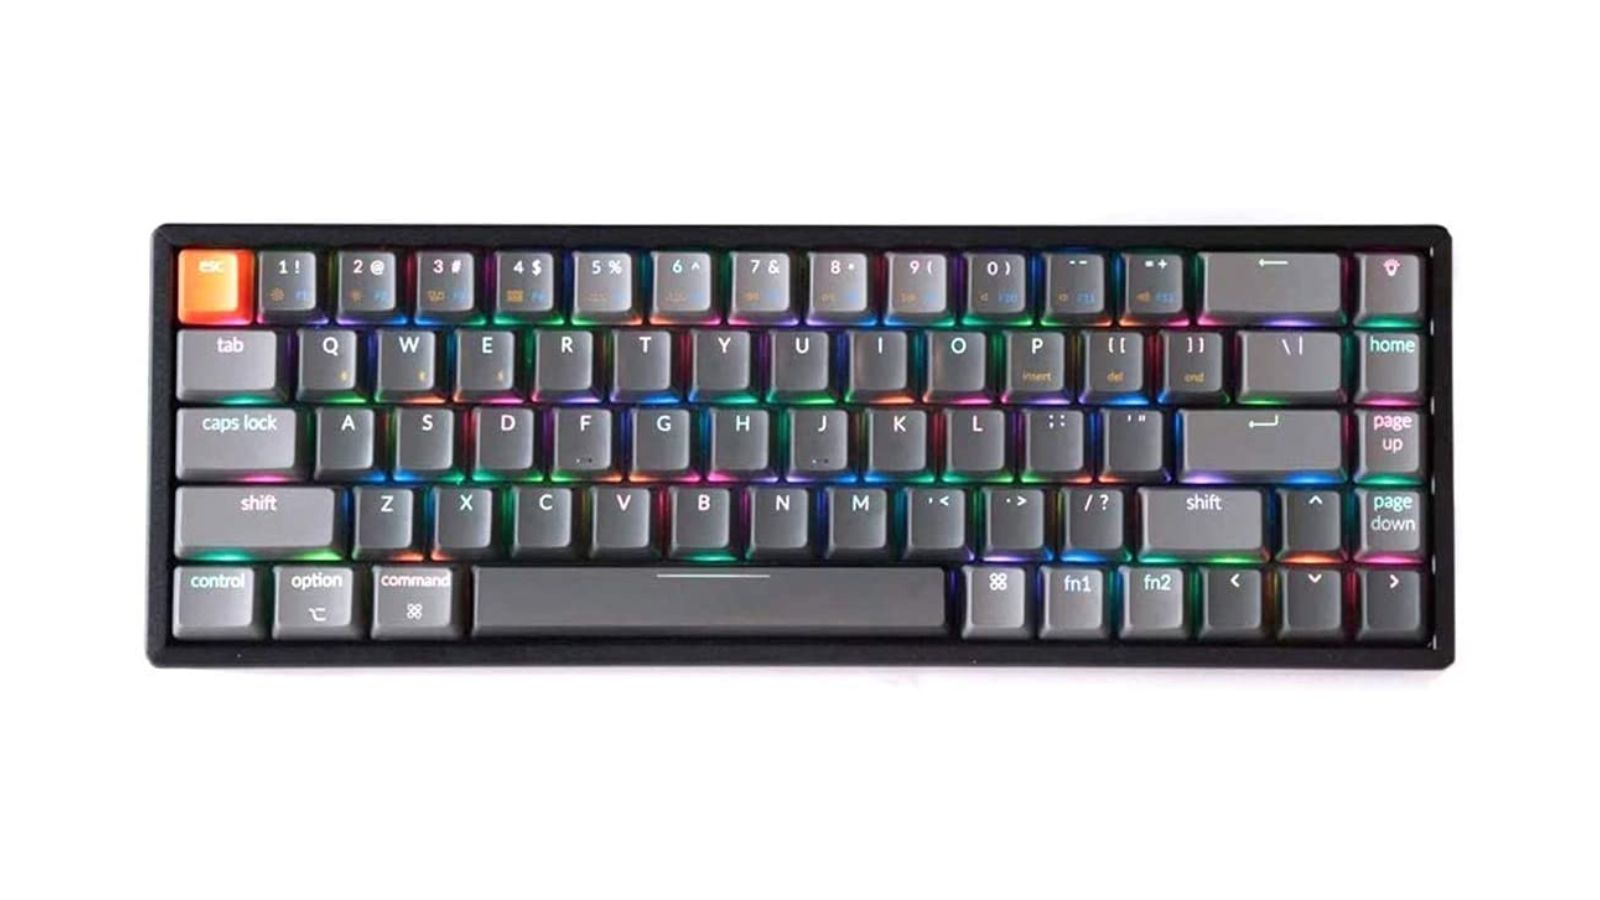 Keychron K6 keyboard against white background